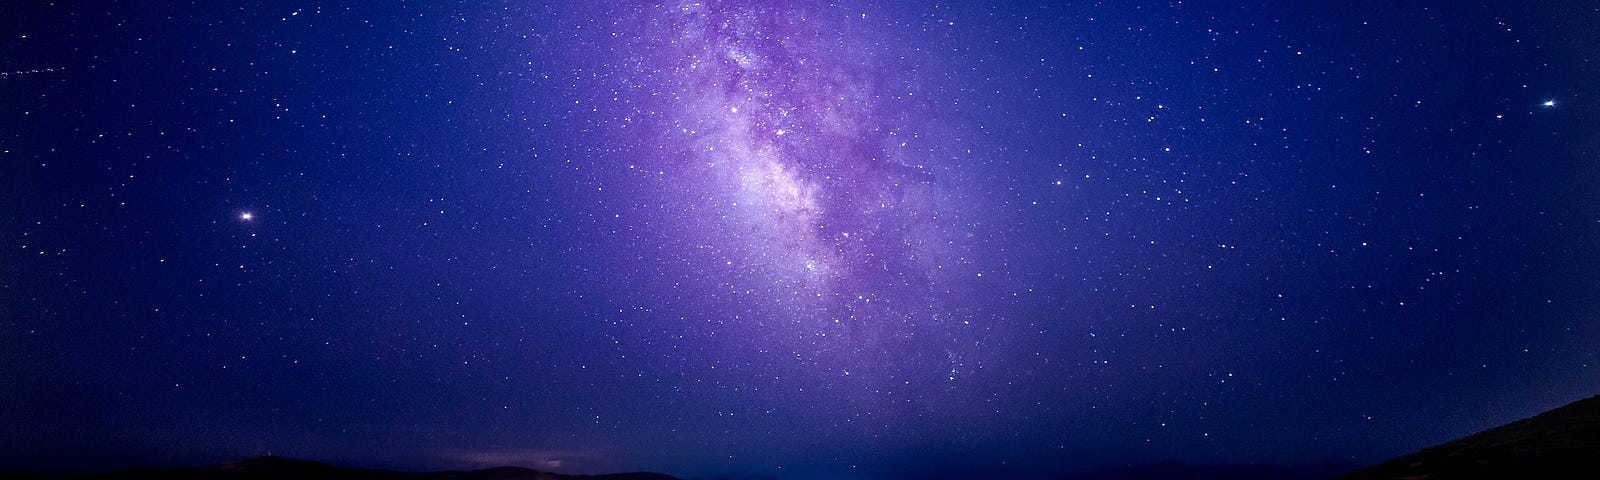 A purple galaxy in a dark blue sky full of stars.